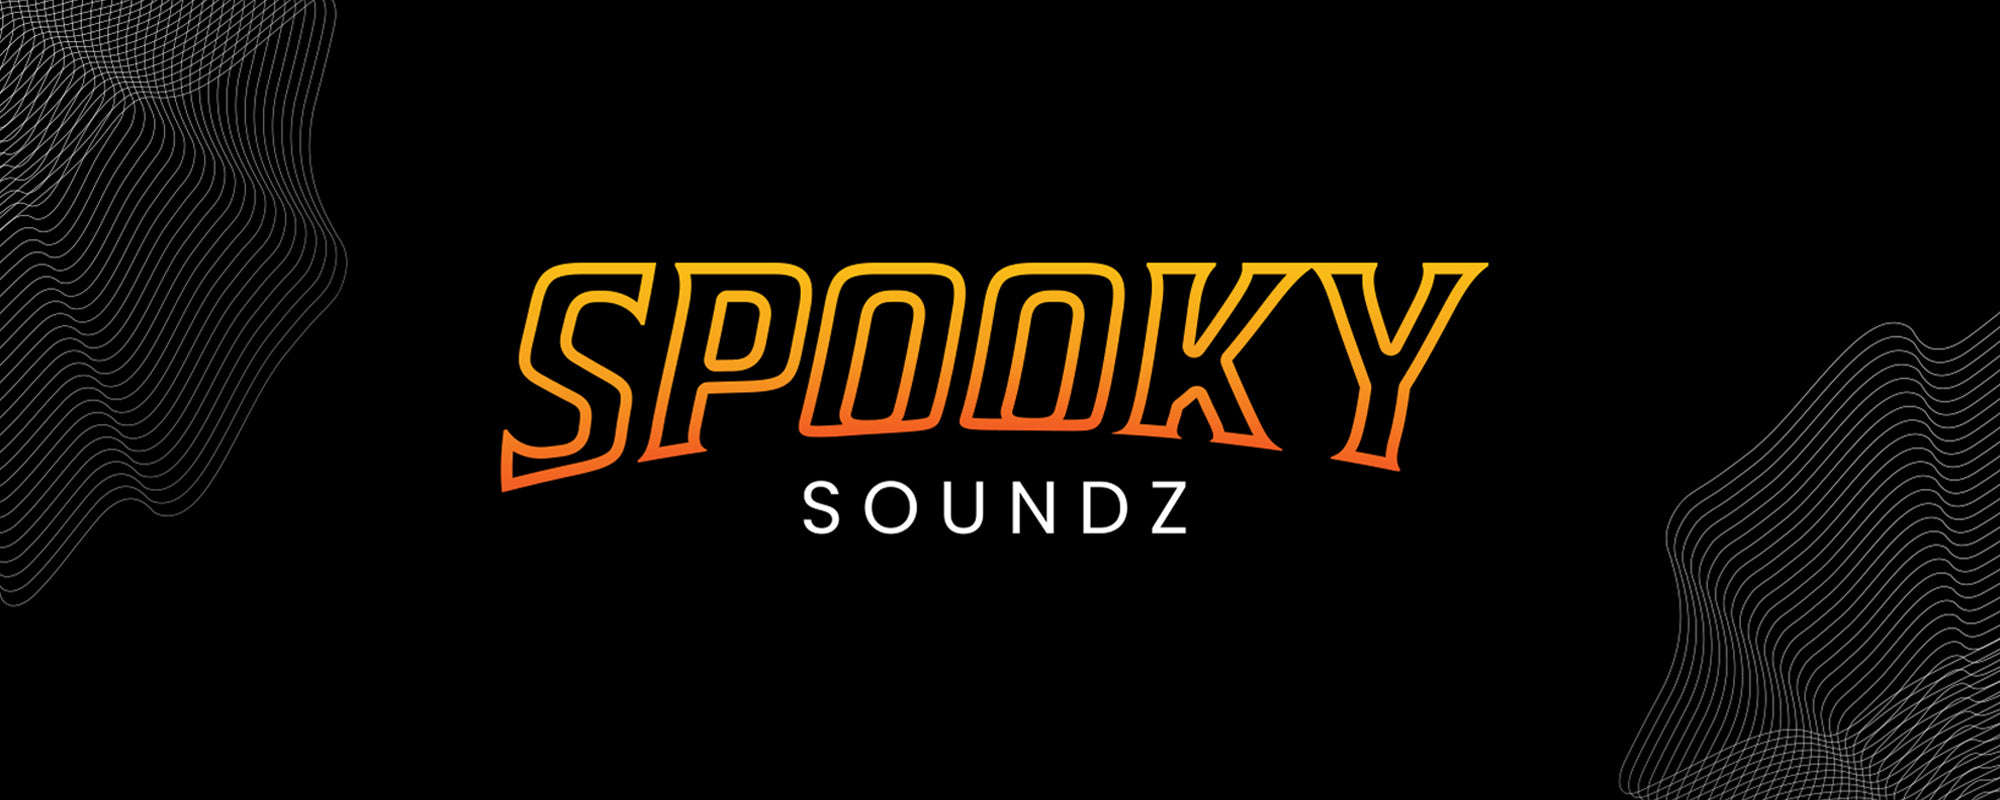 Spooky Soundz banner graphic 